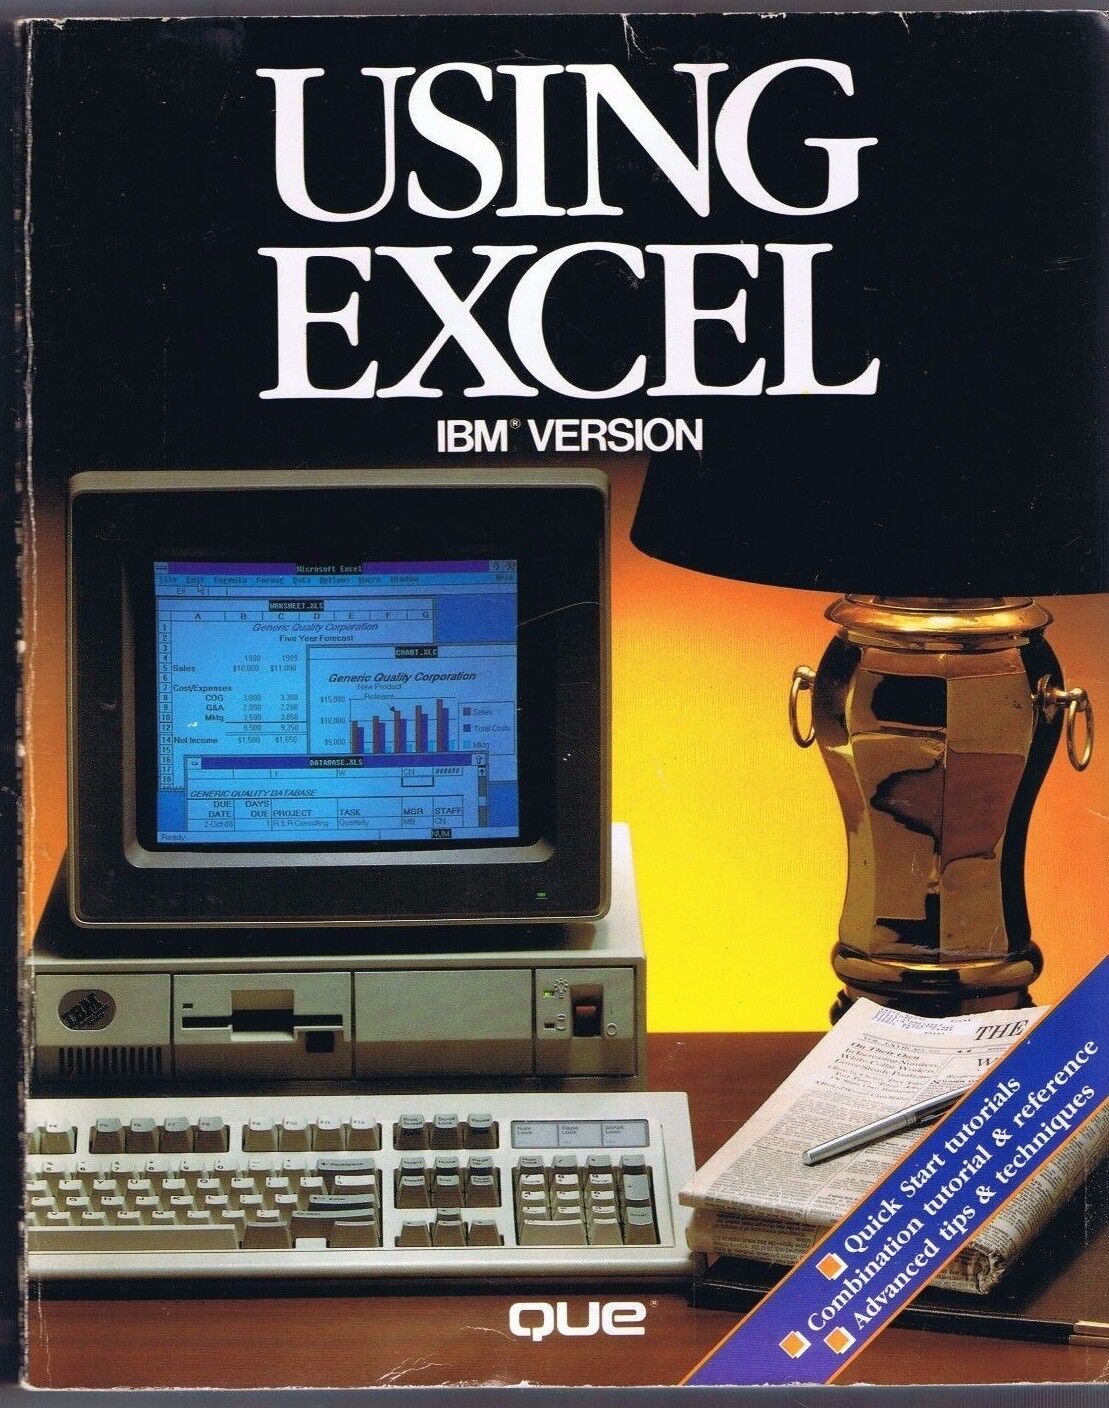 Using Excel IBM Version (1988, QUE) Free USA Shipping